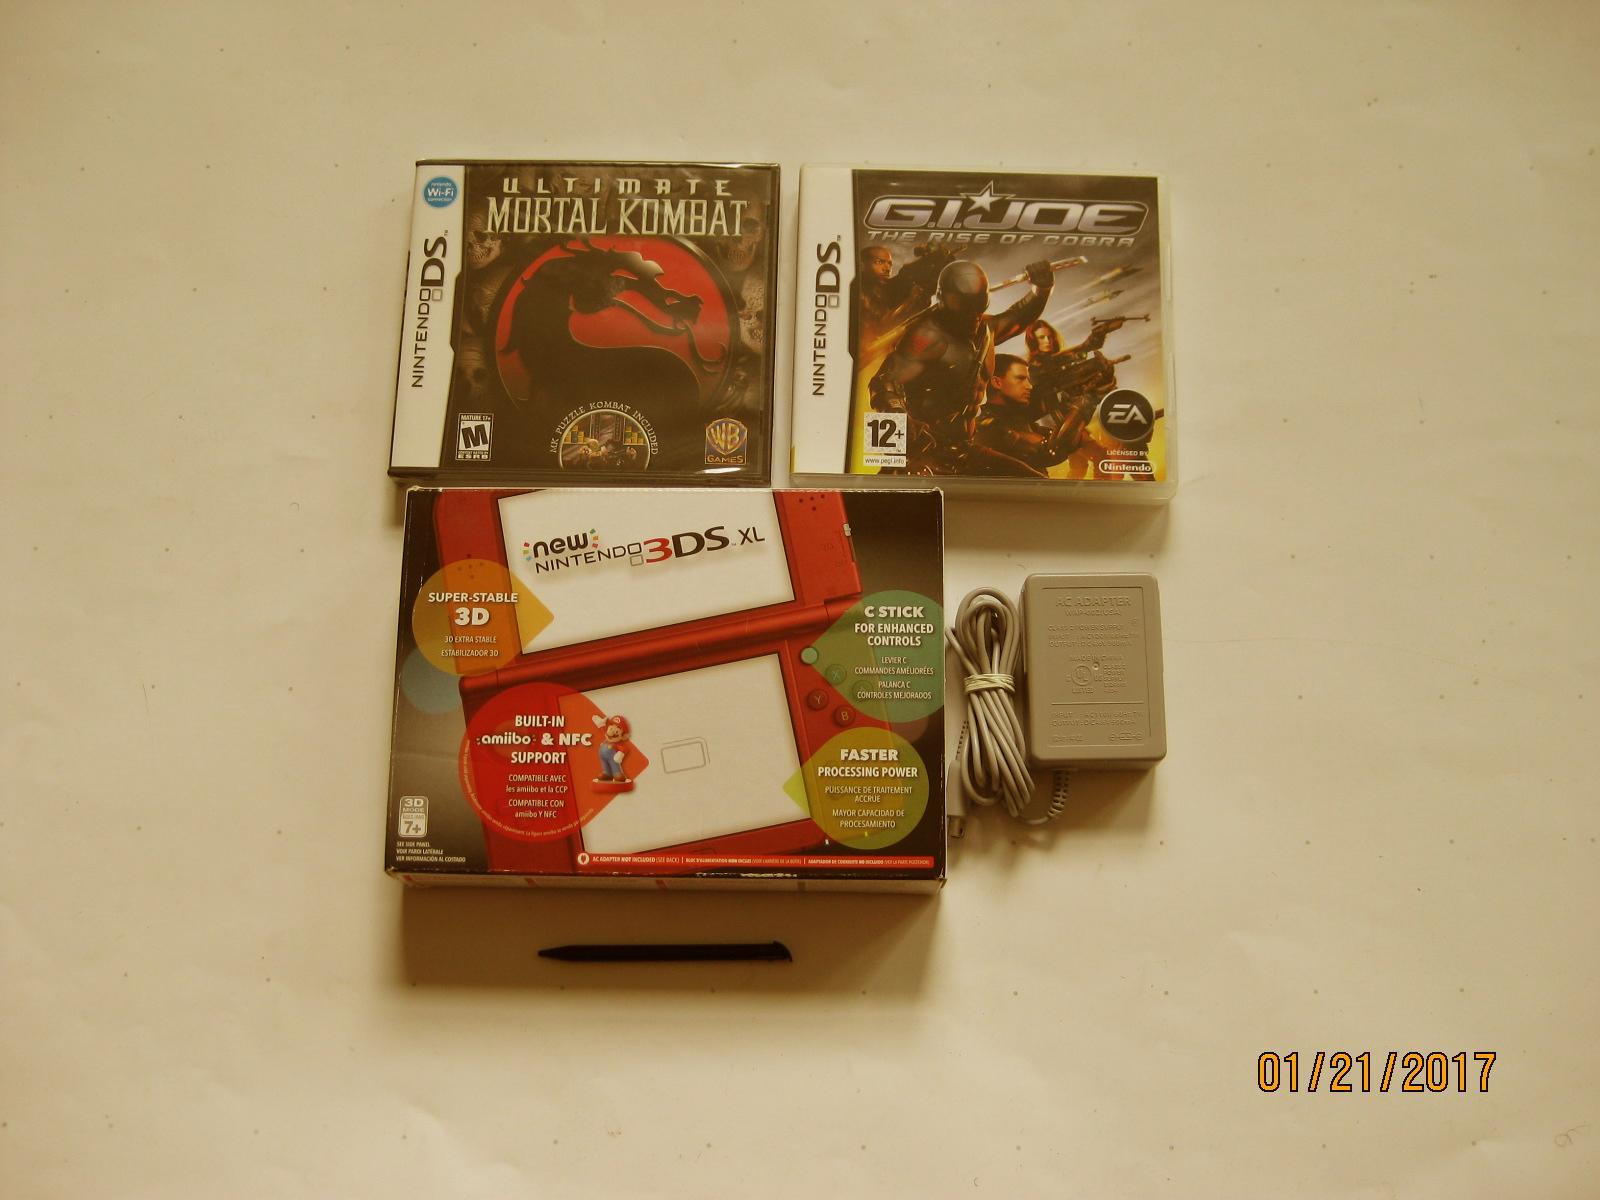 Nintendo DS GoldenEye 007 NTSC-U/C (US/CA) Video Games for sale